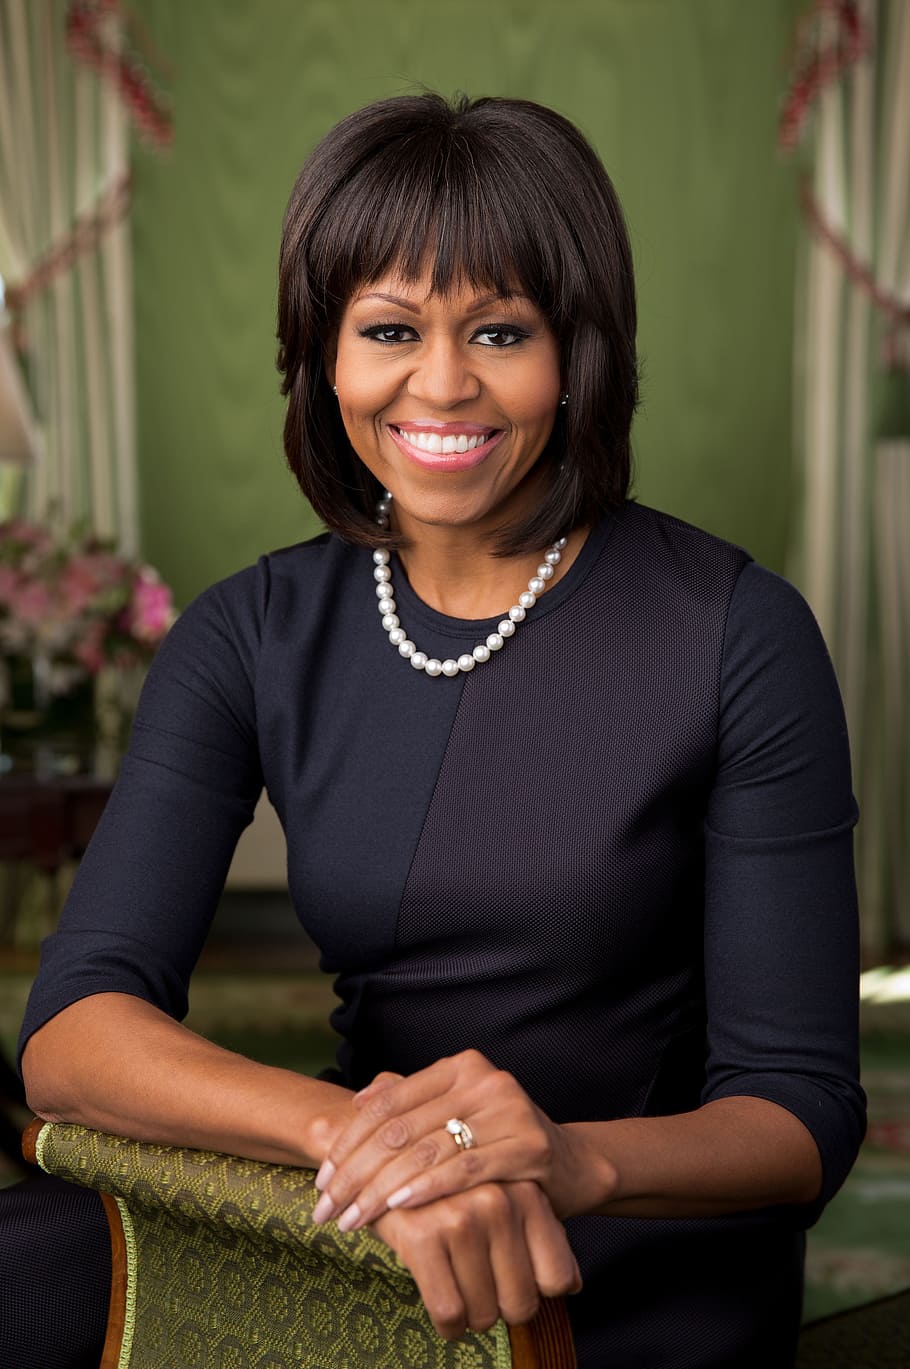 Michelle Obama, Michelle Obama, 2013, ภาพเหมือนอย่างเป็นทางการ, ภรรยาของประธานาธิบดีแห่งสหรัฐอเมริกา, สุภาพสตรีหมายเลขหนึ่ง, แอฟริกัน - อเมริกัน, ห้องสีขาวบ้านสีเขียว, บารัคฮัสเซนโอบามา, ผู้หญิง, ยิ้ม, รอยยิ้ม, มีเสน่ห์, สวย, ความงาม, ภรรยาของ ประมุขแห่งรัฐ, สหรัฐอเมริกา, รัฐบาลกลางสหรัฐ, มิเชล, มิเชลลาโวห์นโอบามา, เกิดมิเชลล์ลาโวห์นโรบินสัน, ทนายความ, นักเขียน, วอลล์เปเปอร์ HD, วอลเปเปอร์โทรศัพท์